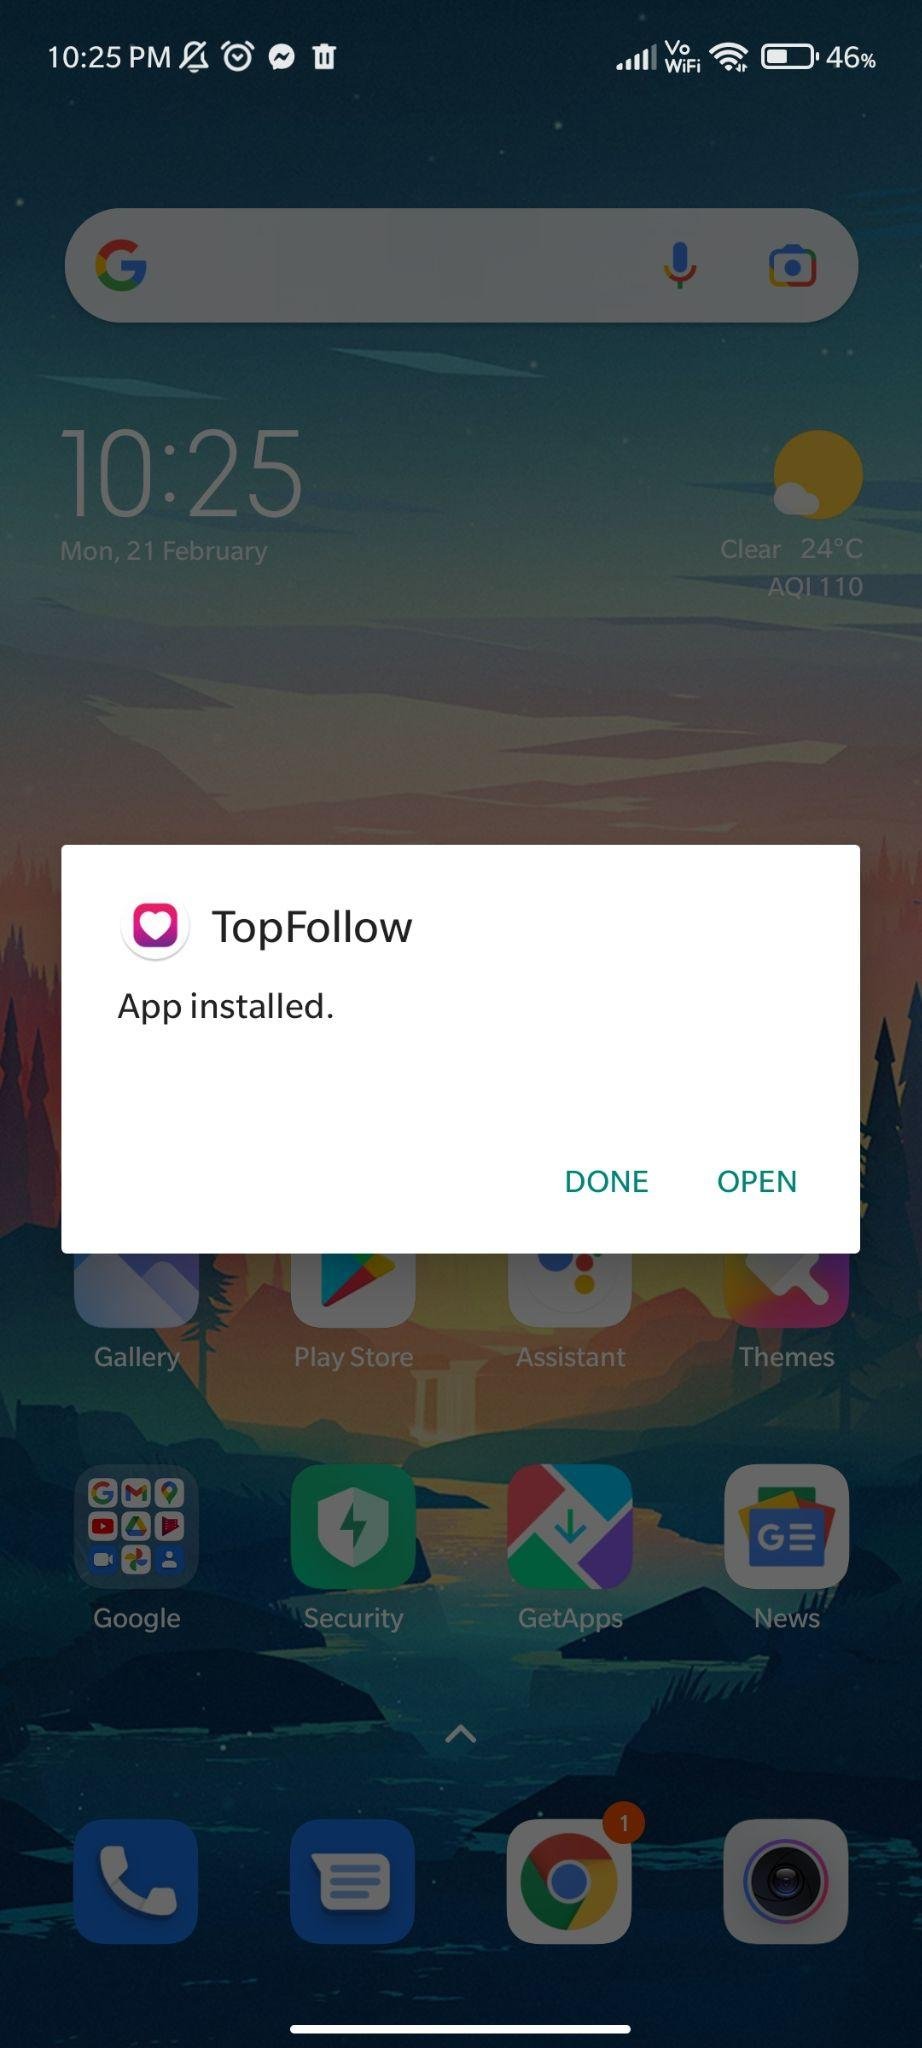 TopFollow installed